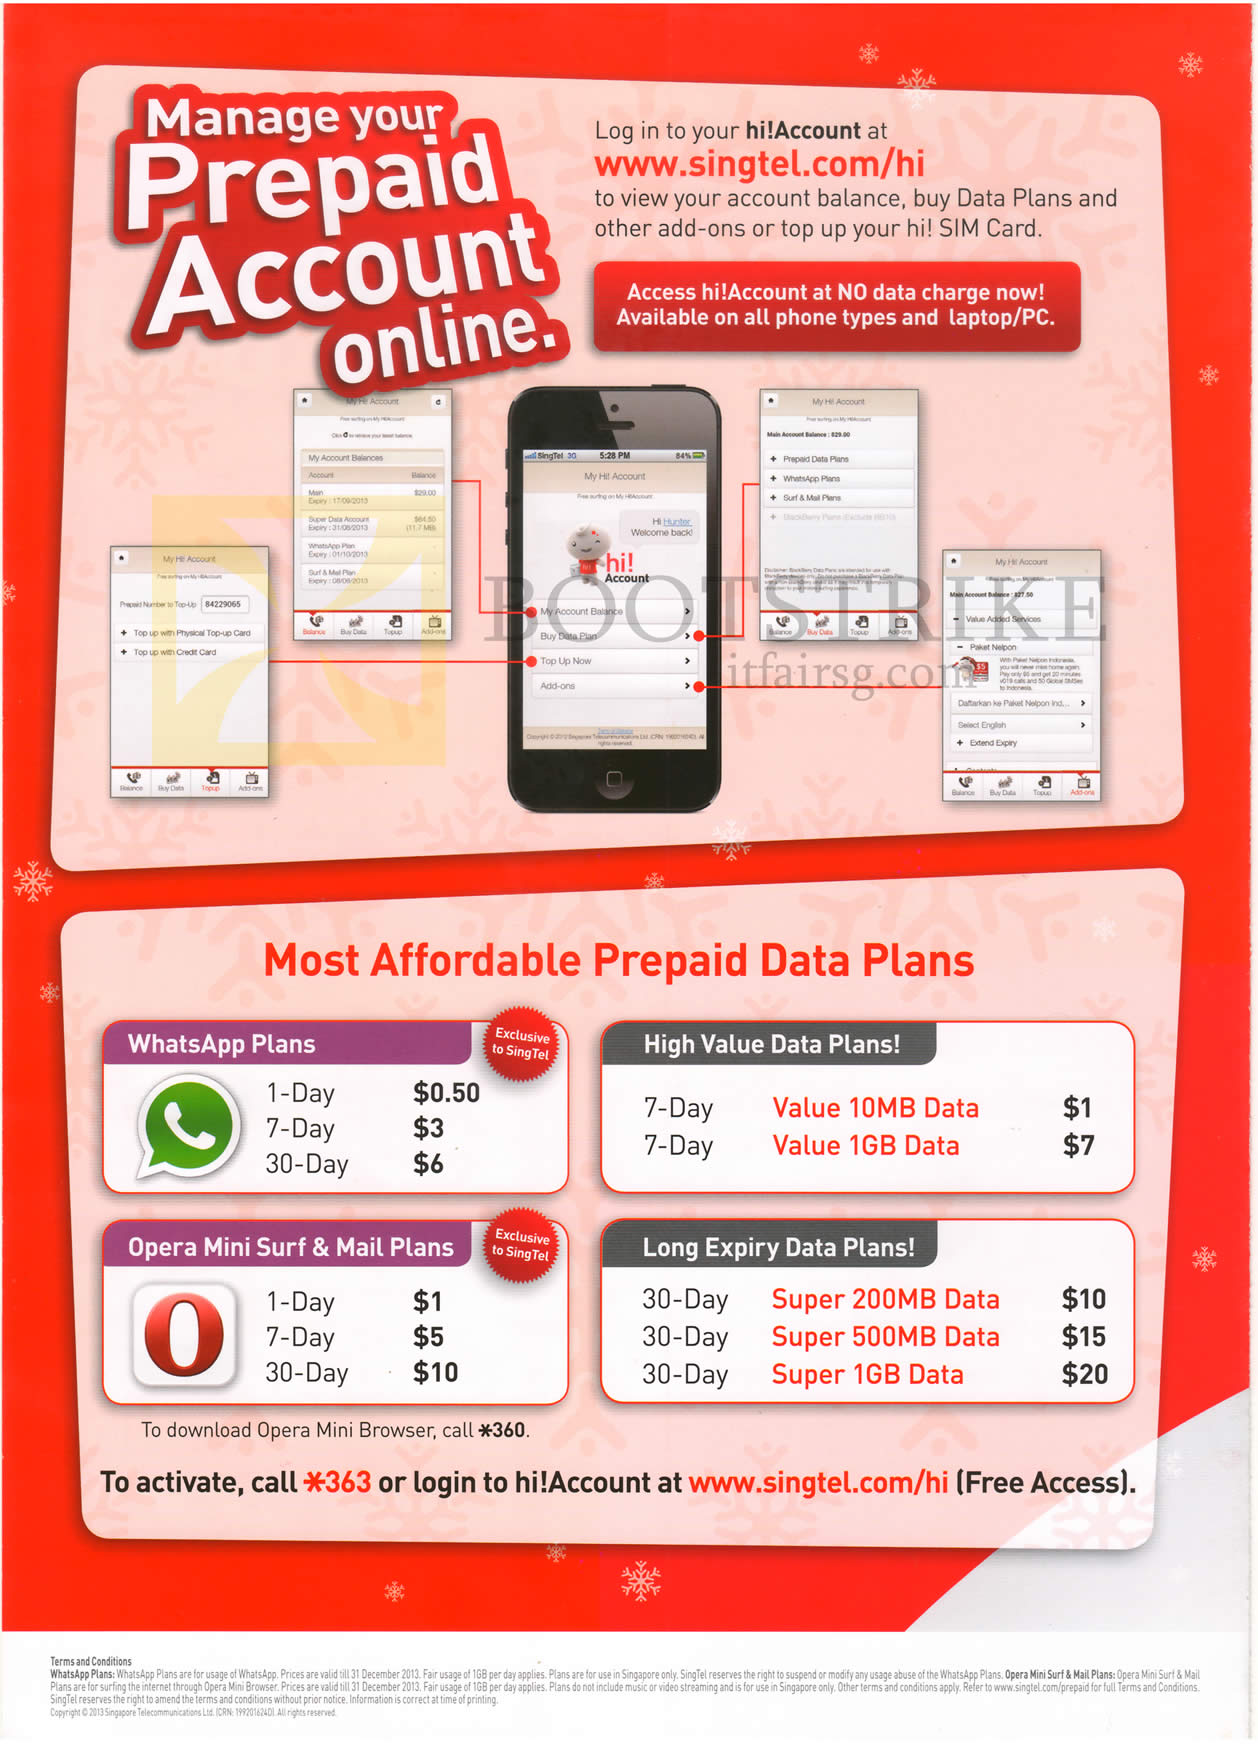 SITEX 2013 price list image brochure of Singtel Mobile Prepaid Hi Card Account, Data Plans, Whatsapp, Opera Mini Surf, Mail, Long Expiry, High Value